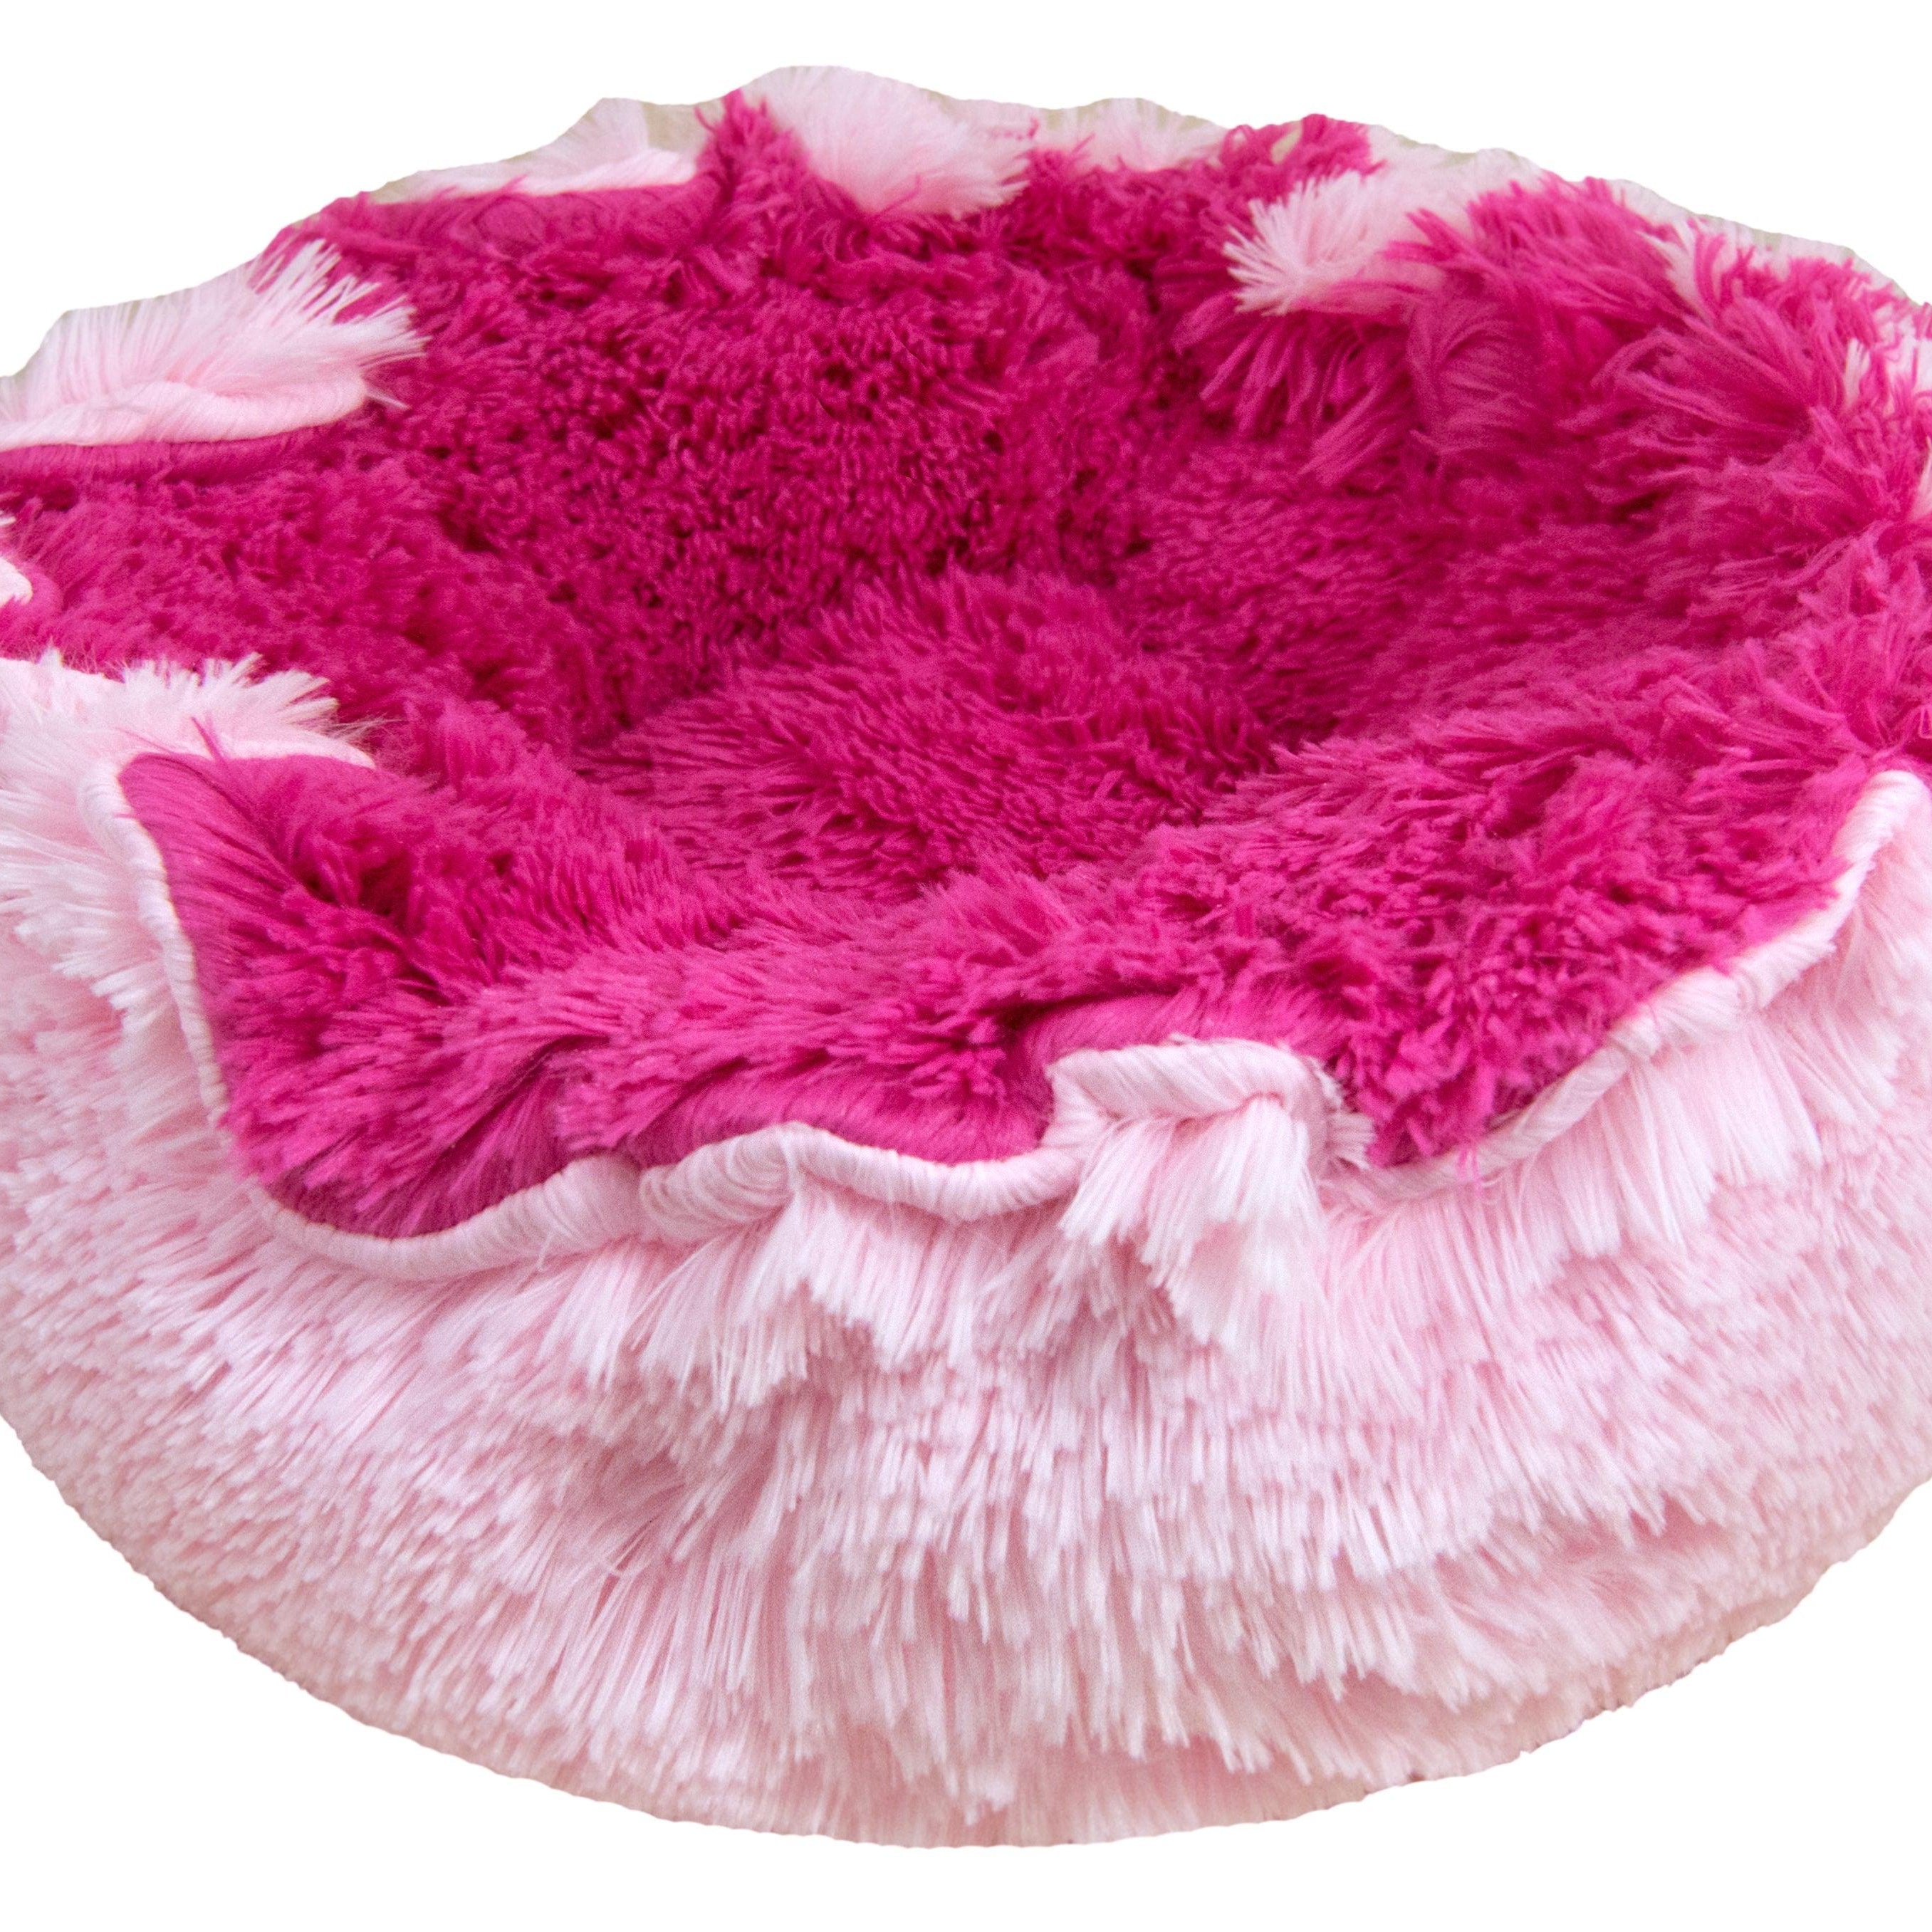 Lily Pod - Bubble Gum and Lollipop with Cotton Candy Patch - Rocky & Maggie's Pet Boutique and Salon